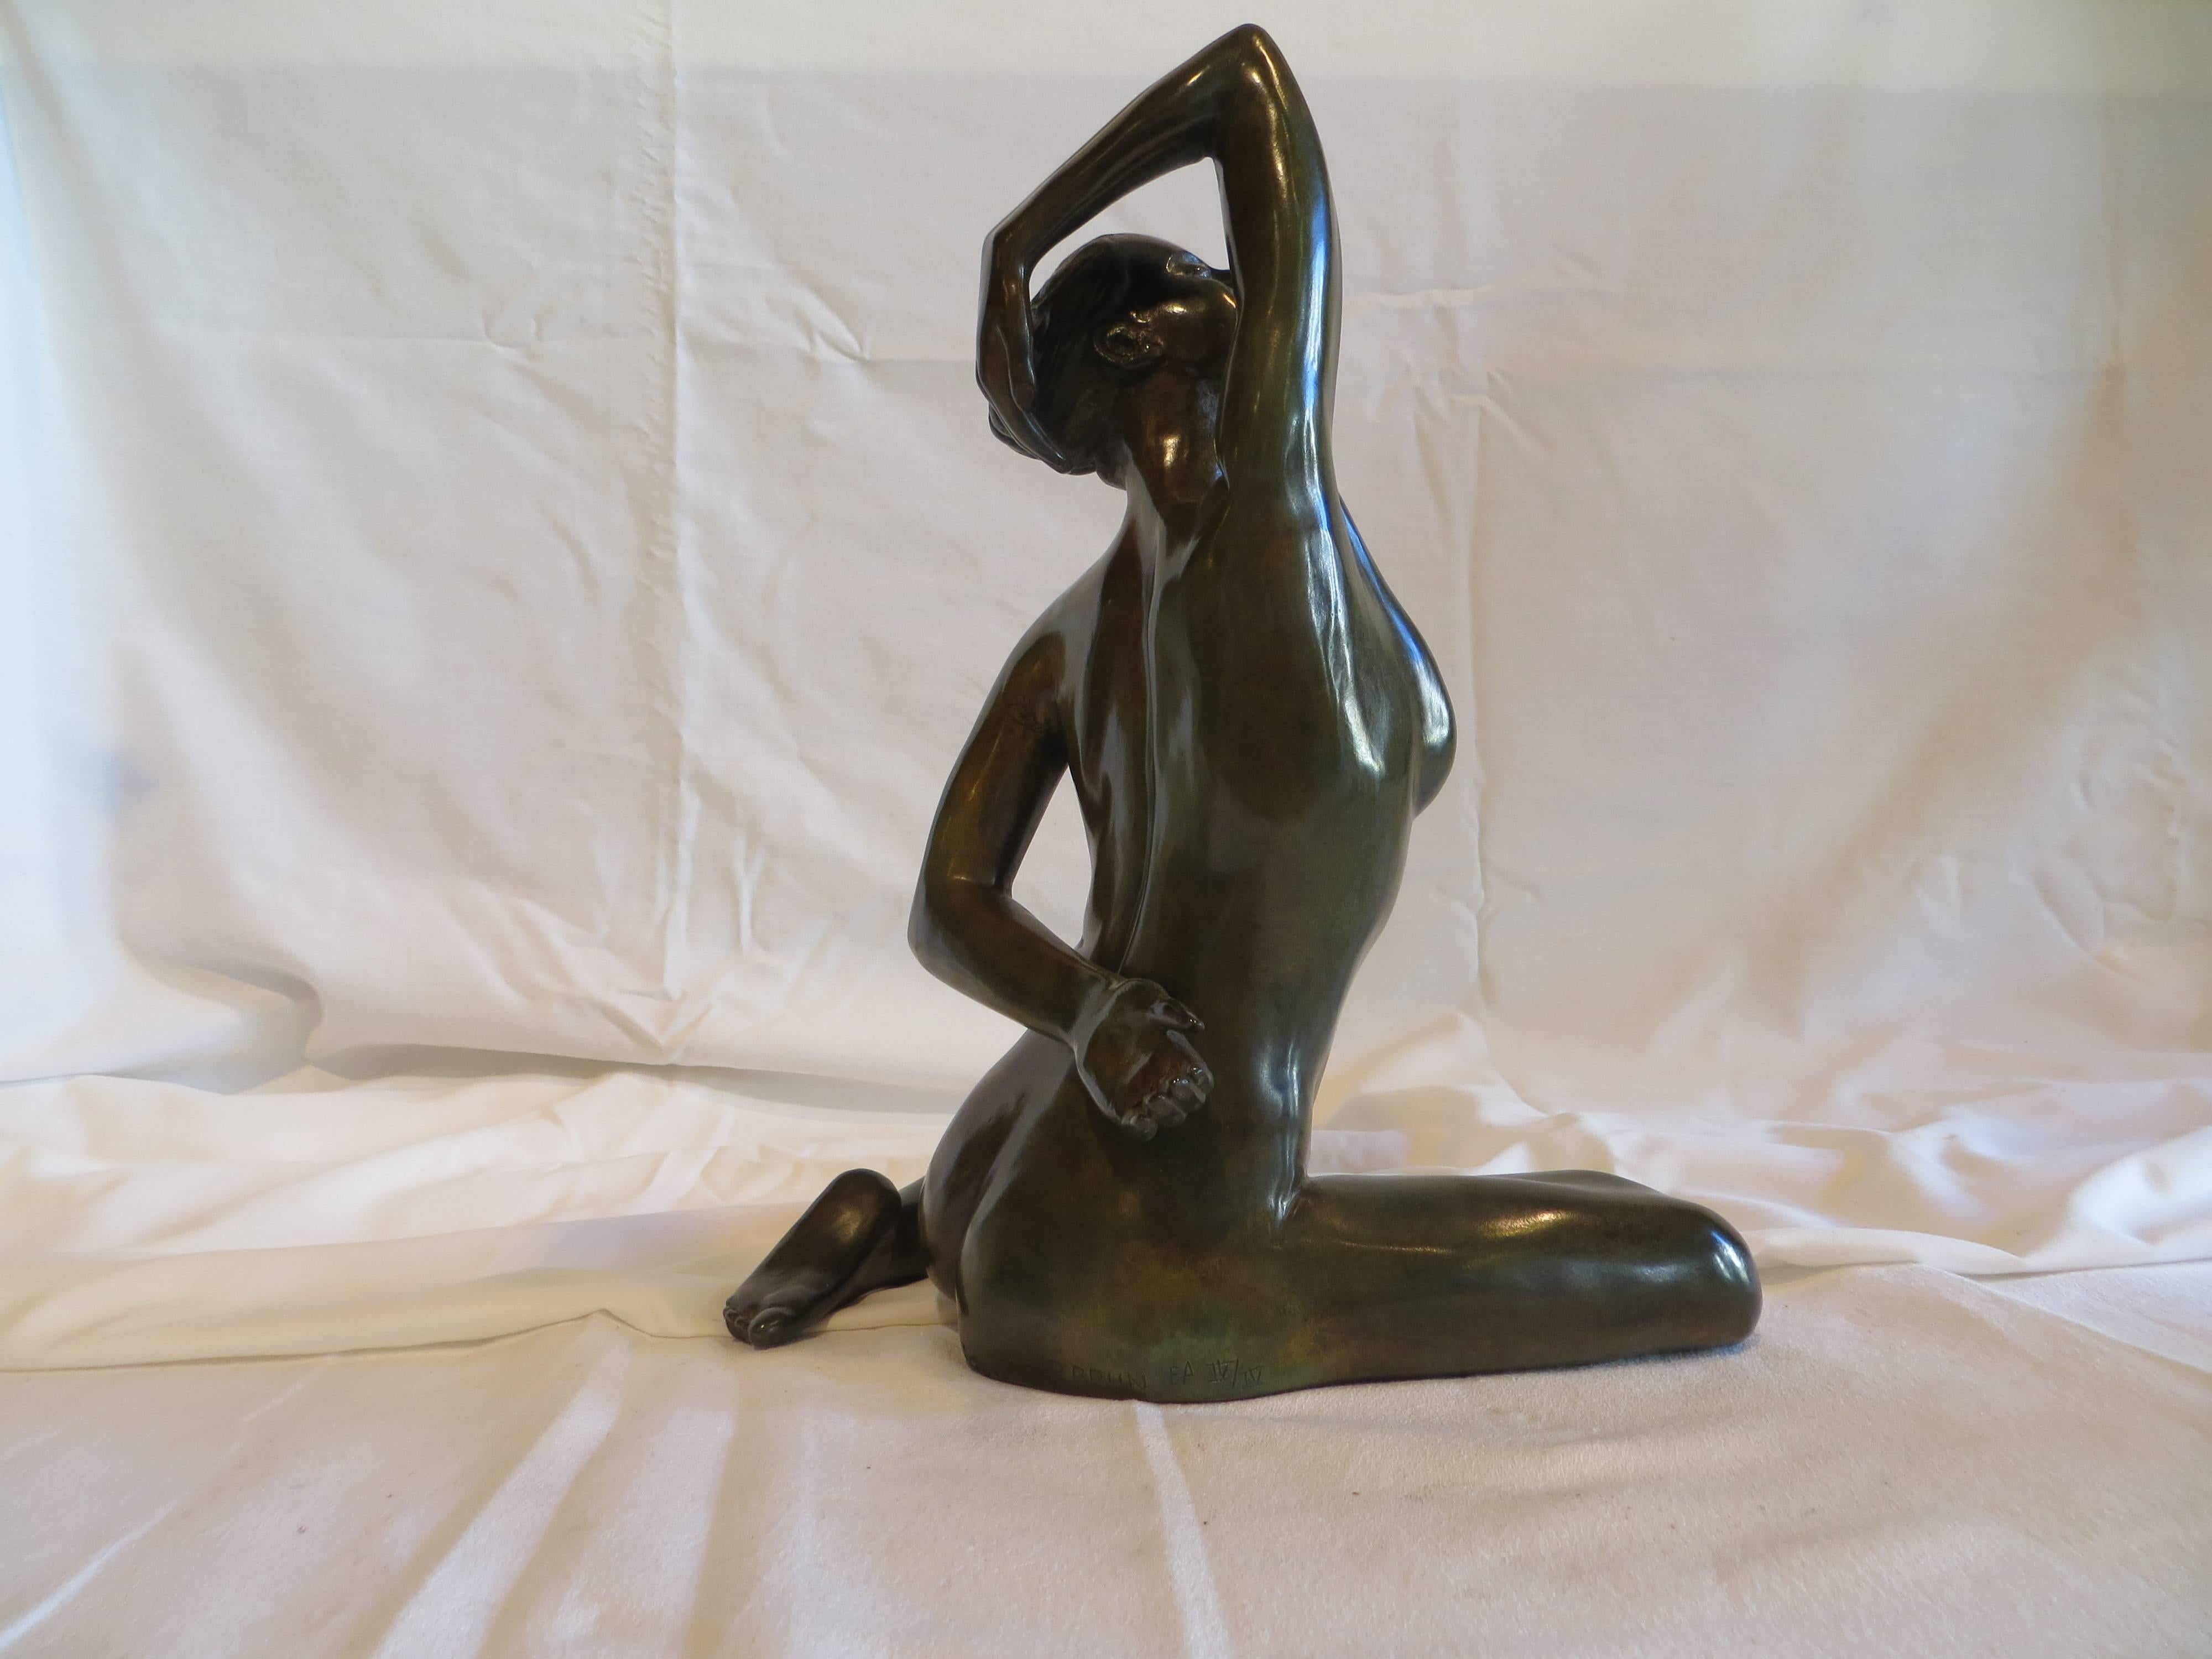 Agosta - Or Figurative Sculpture par Patrick Brun